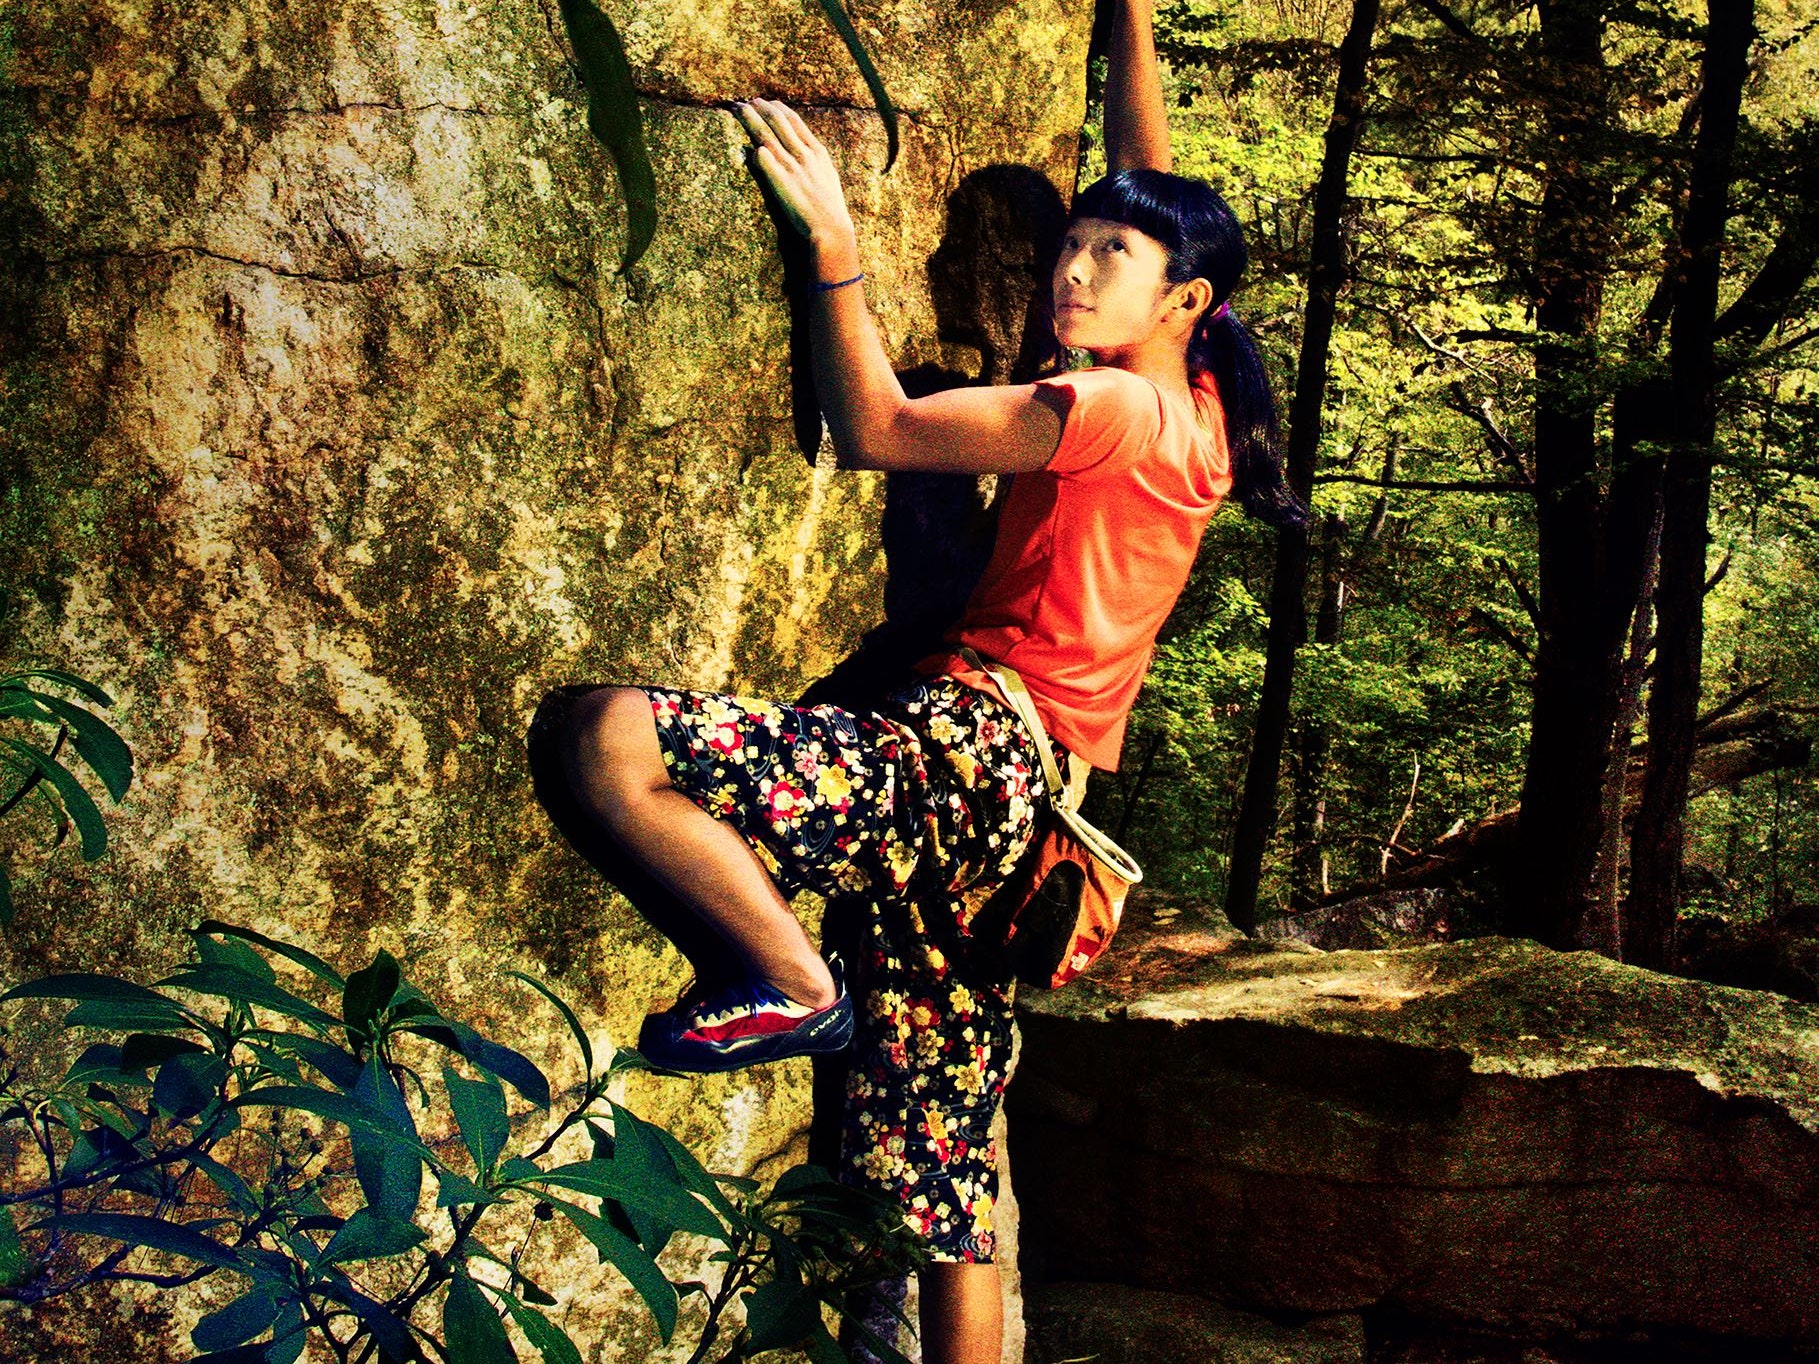 delayna marshall share sex while rock climbing photos